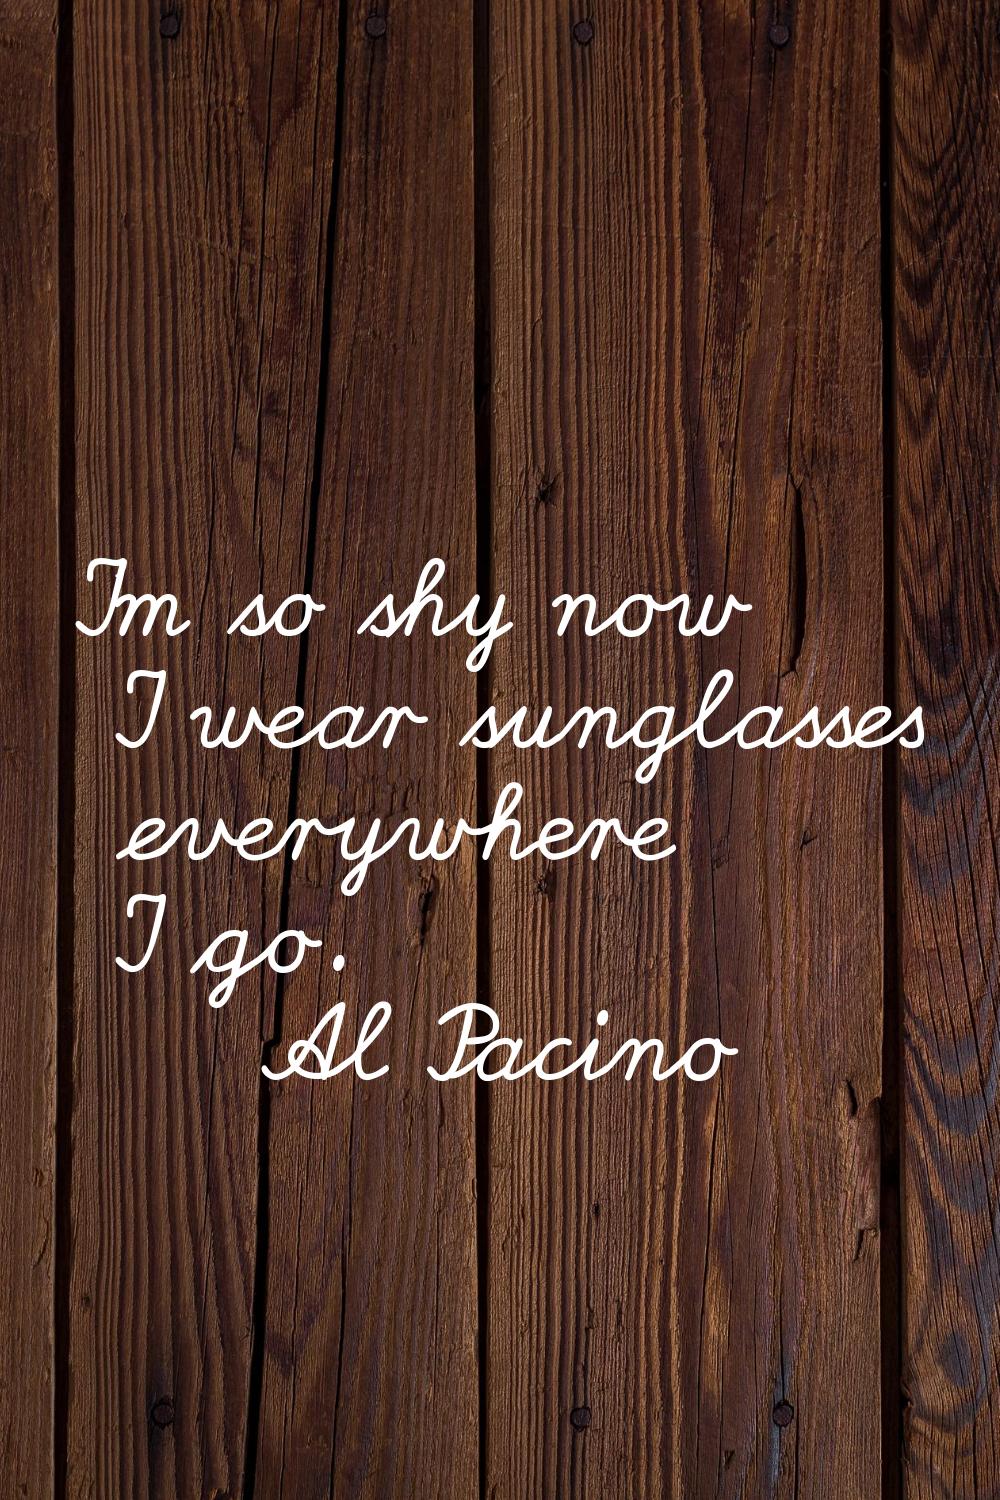 I'm so shy now I wear sunglasses everywhere I go.